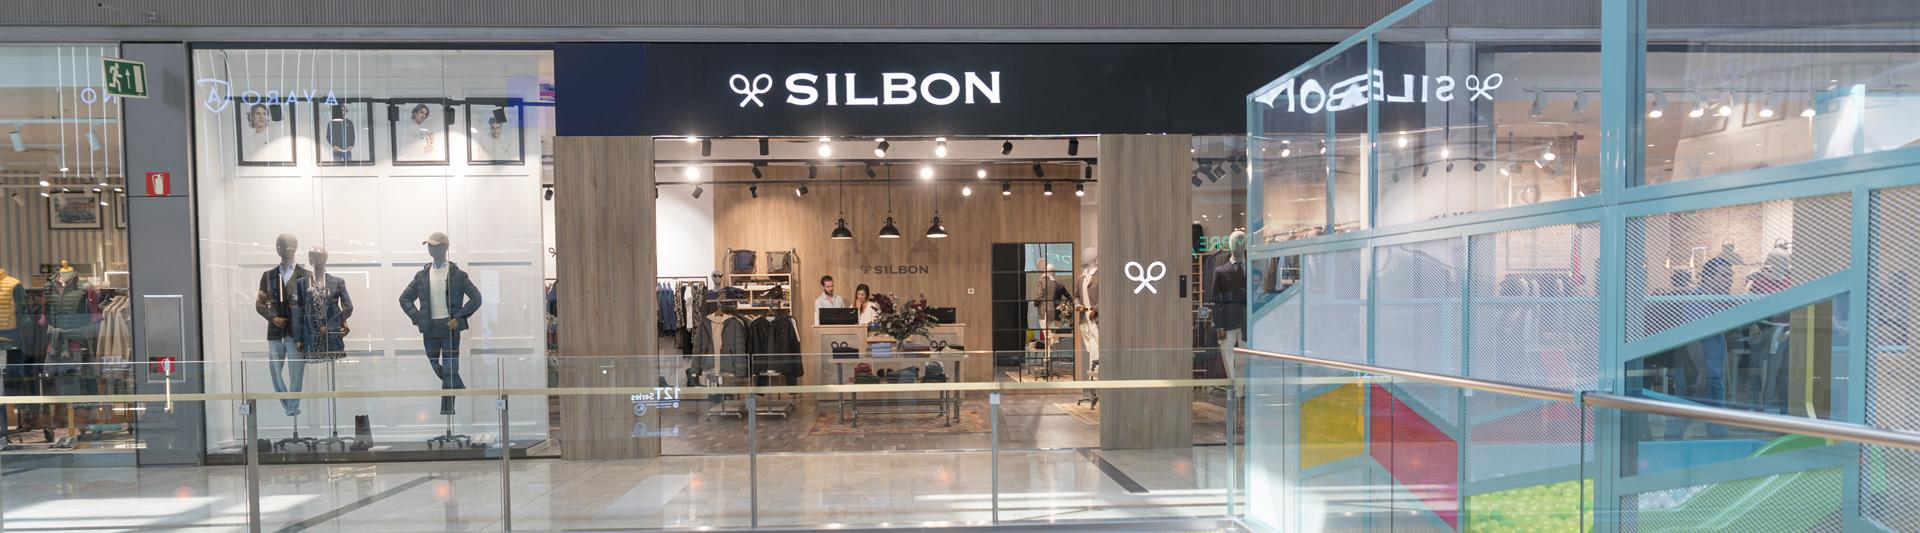 SILBON_56.jpg